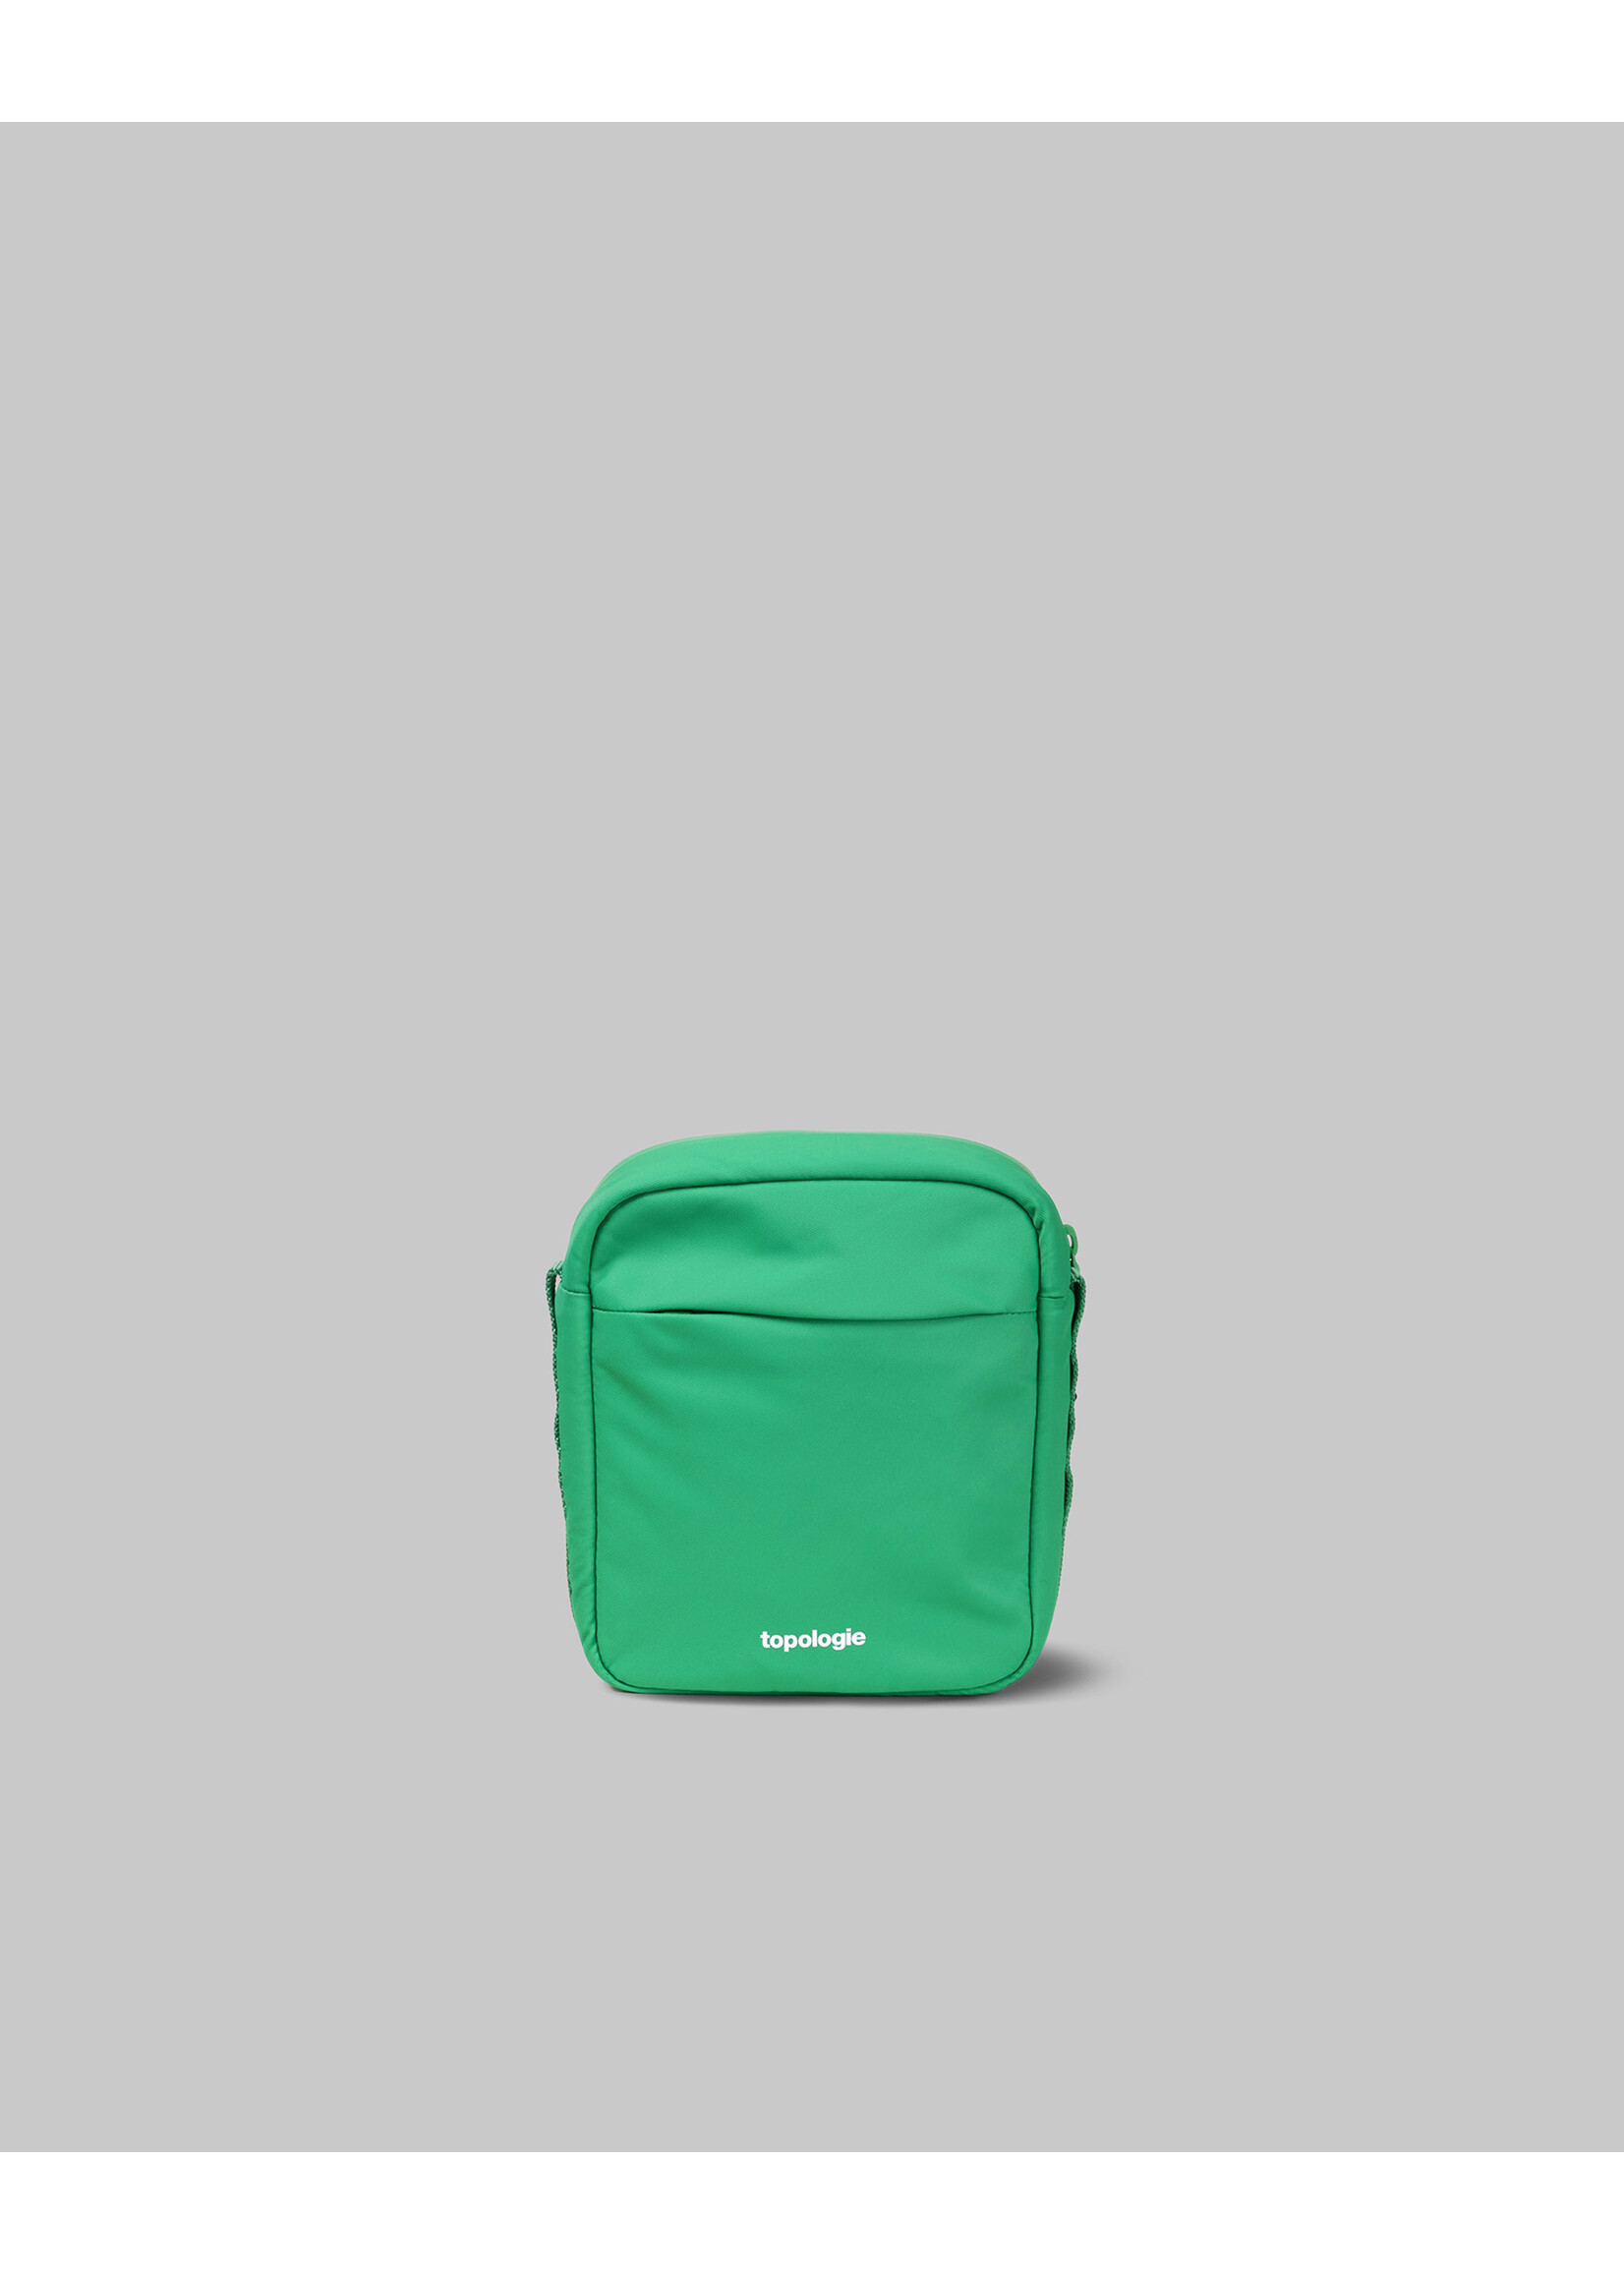 Topologie Tinbox Medium Bag